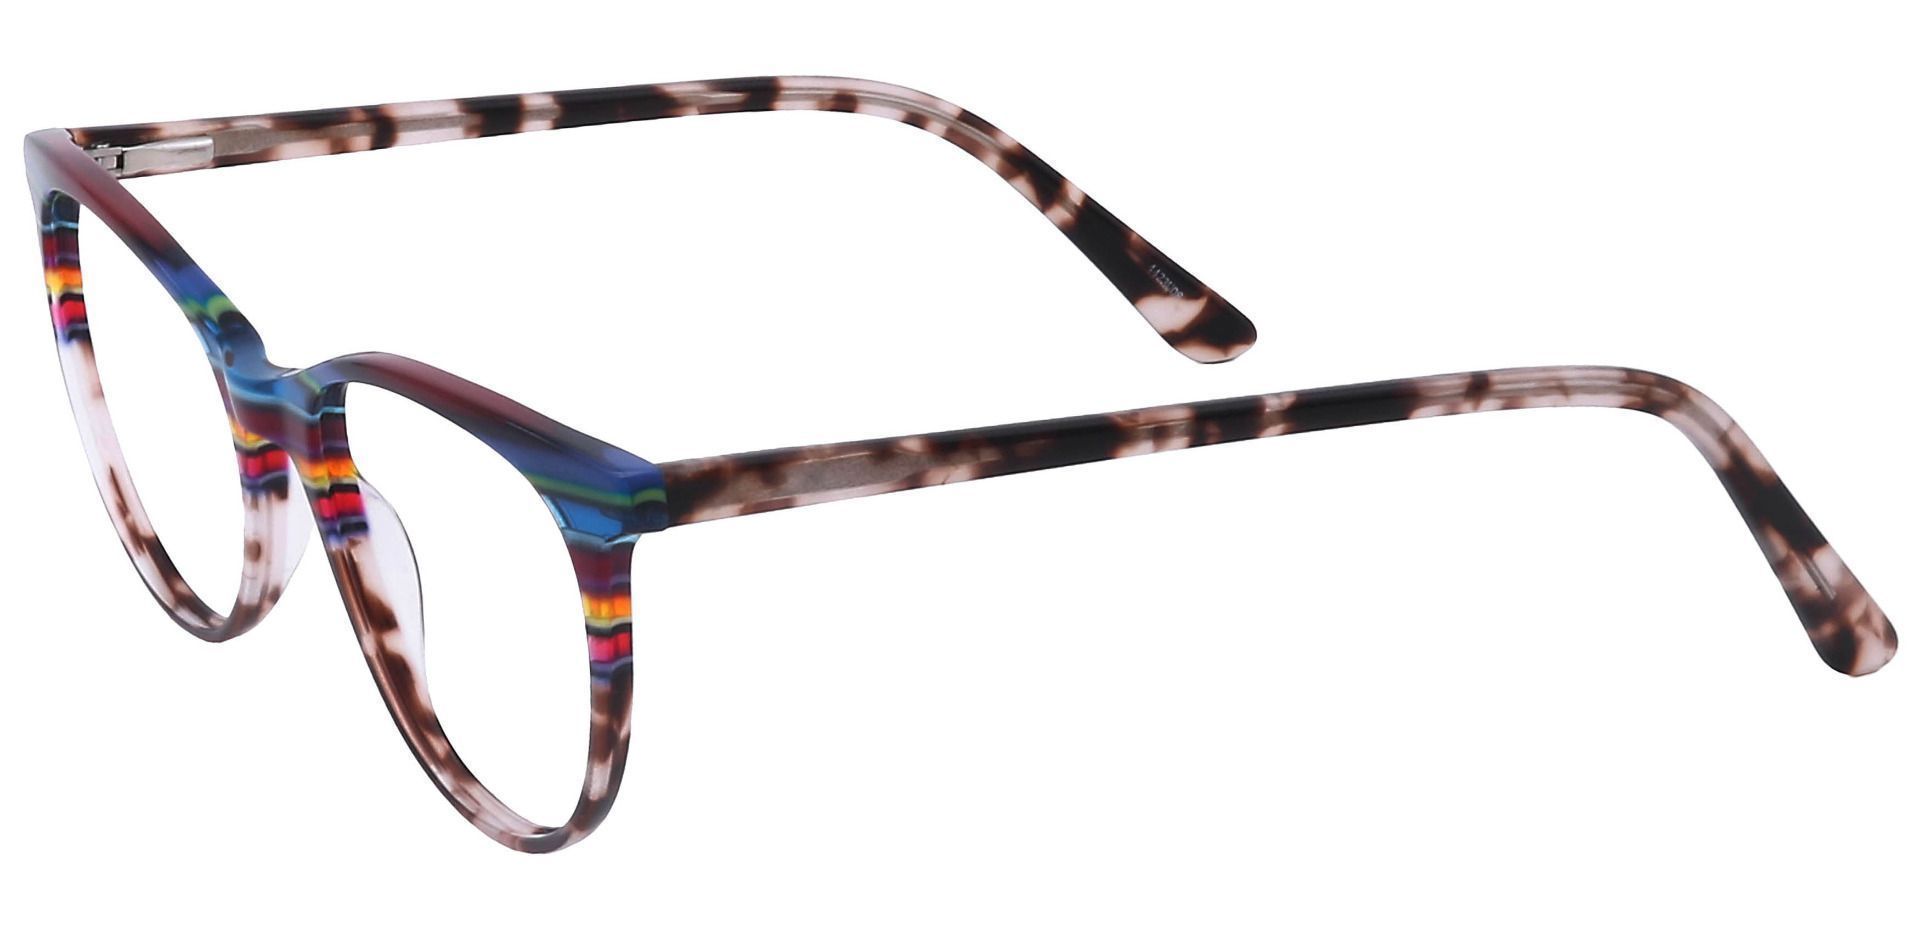 Patagonia Oval Eyeglasses Frame - Multi Colored Stripes